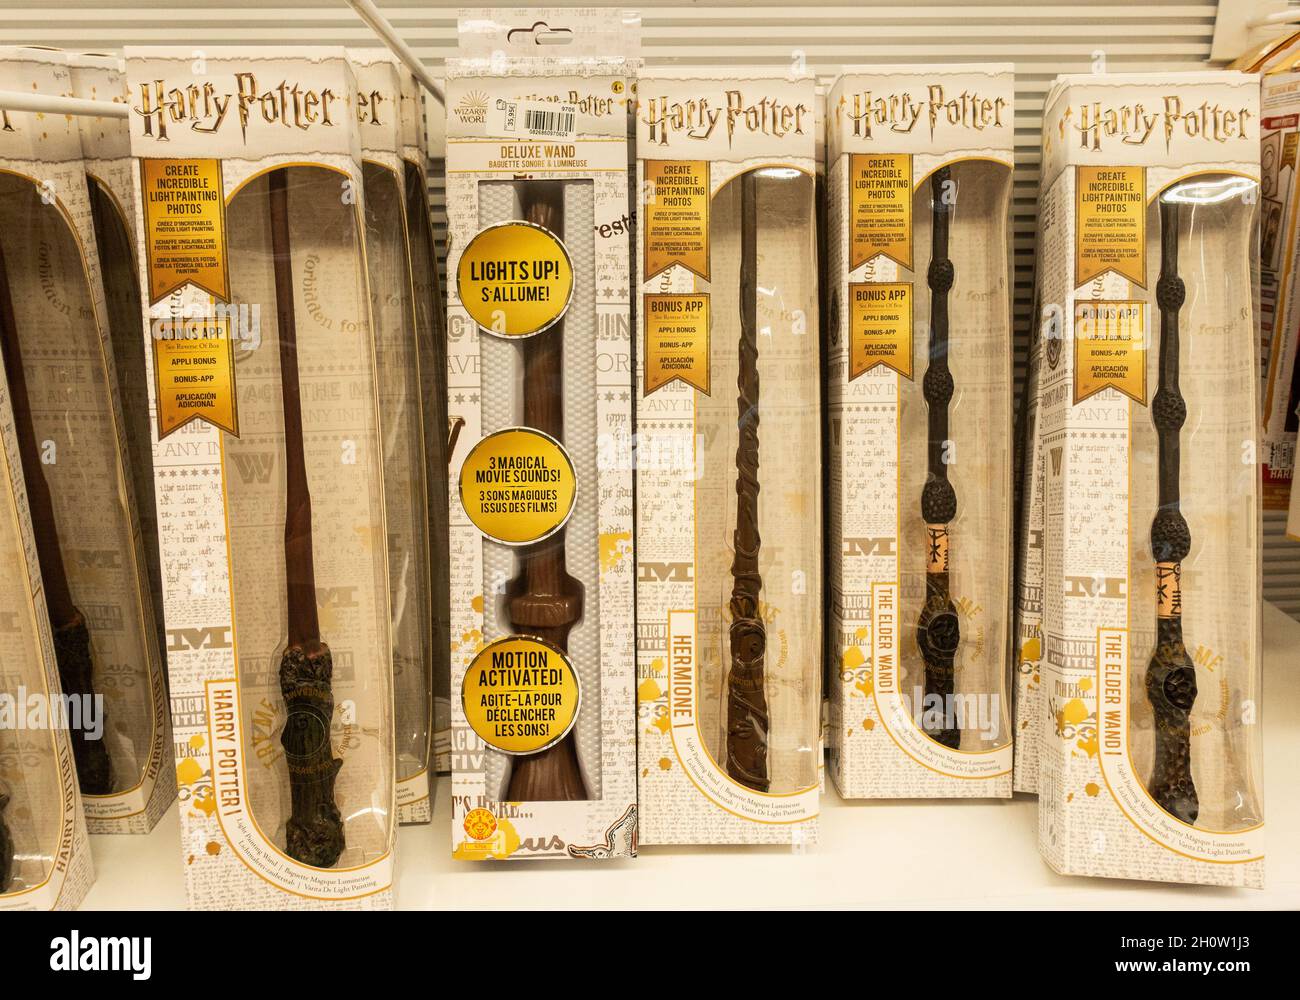 Harry Potter wands, merchandise in store in Spain Stock Photo